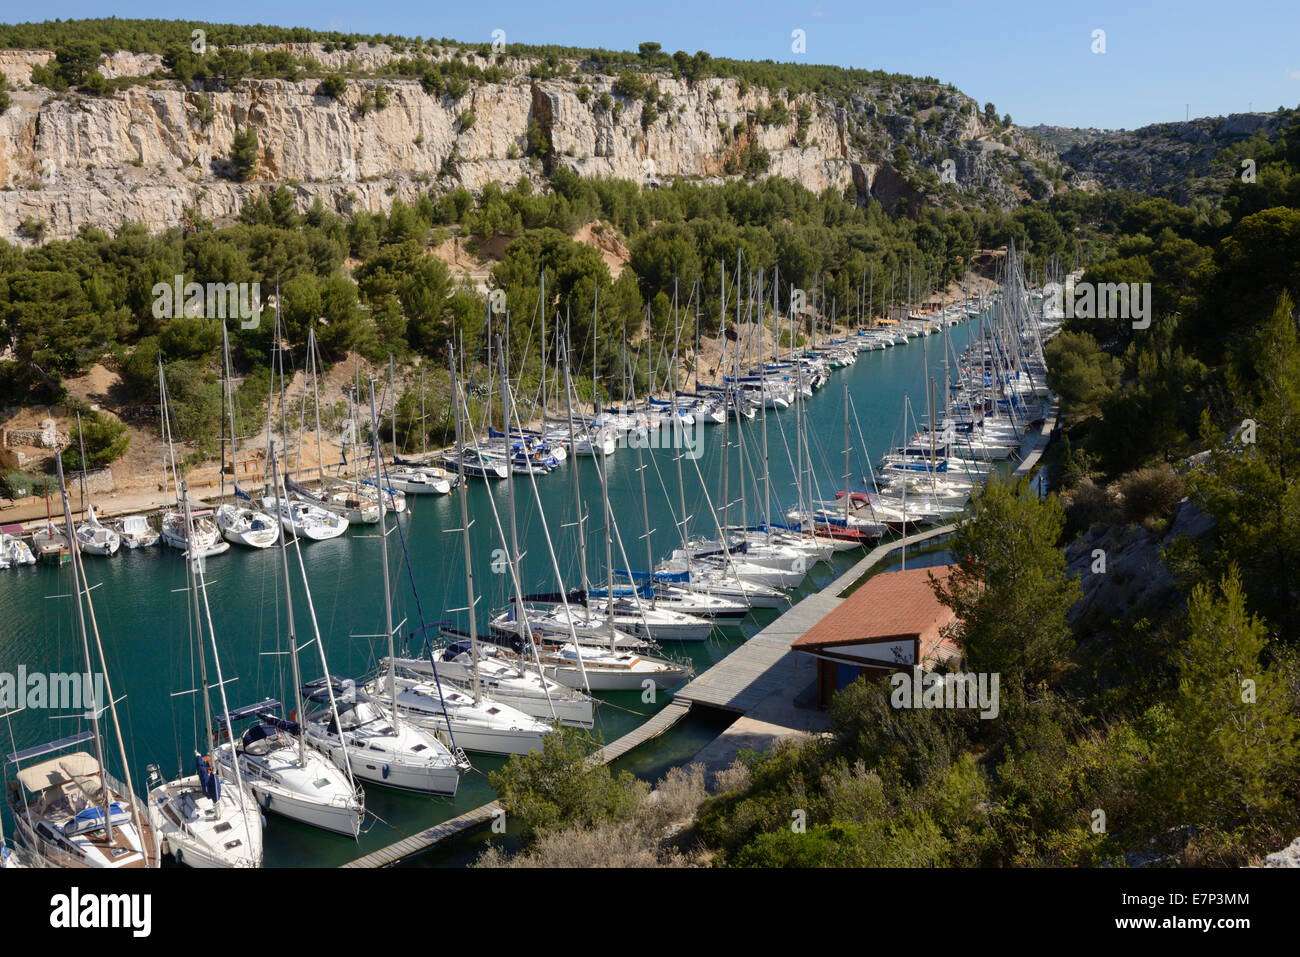 Europe, France, Provence-Alpes-Côte d'Azur, Provence, Cassis, calanque, boats, harbour, marina, coast, coastal, Mediterranean, i Stock Photo